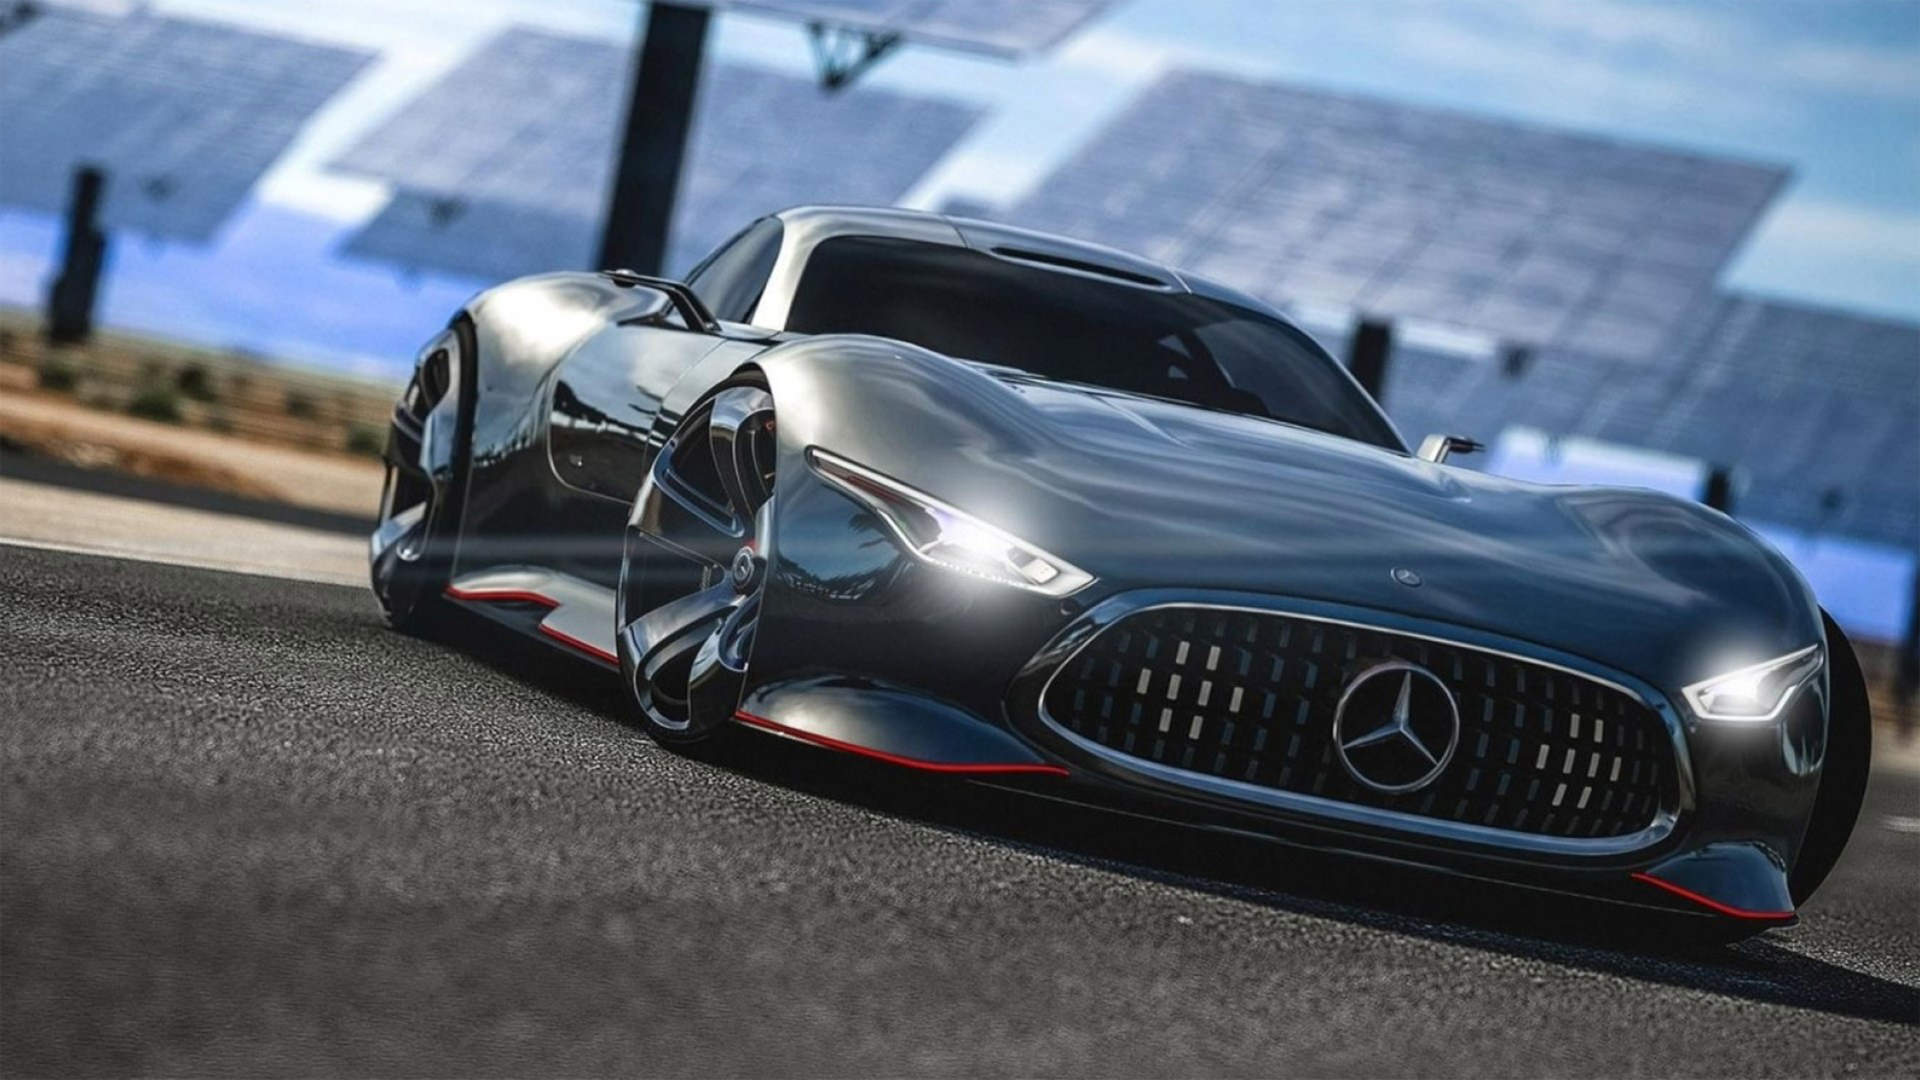 Benz car in Gran Turismo 7 racing game